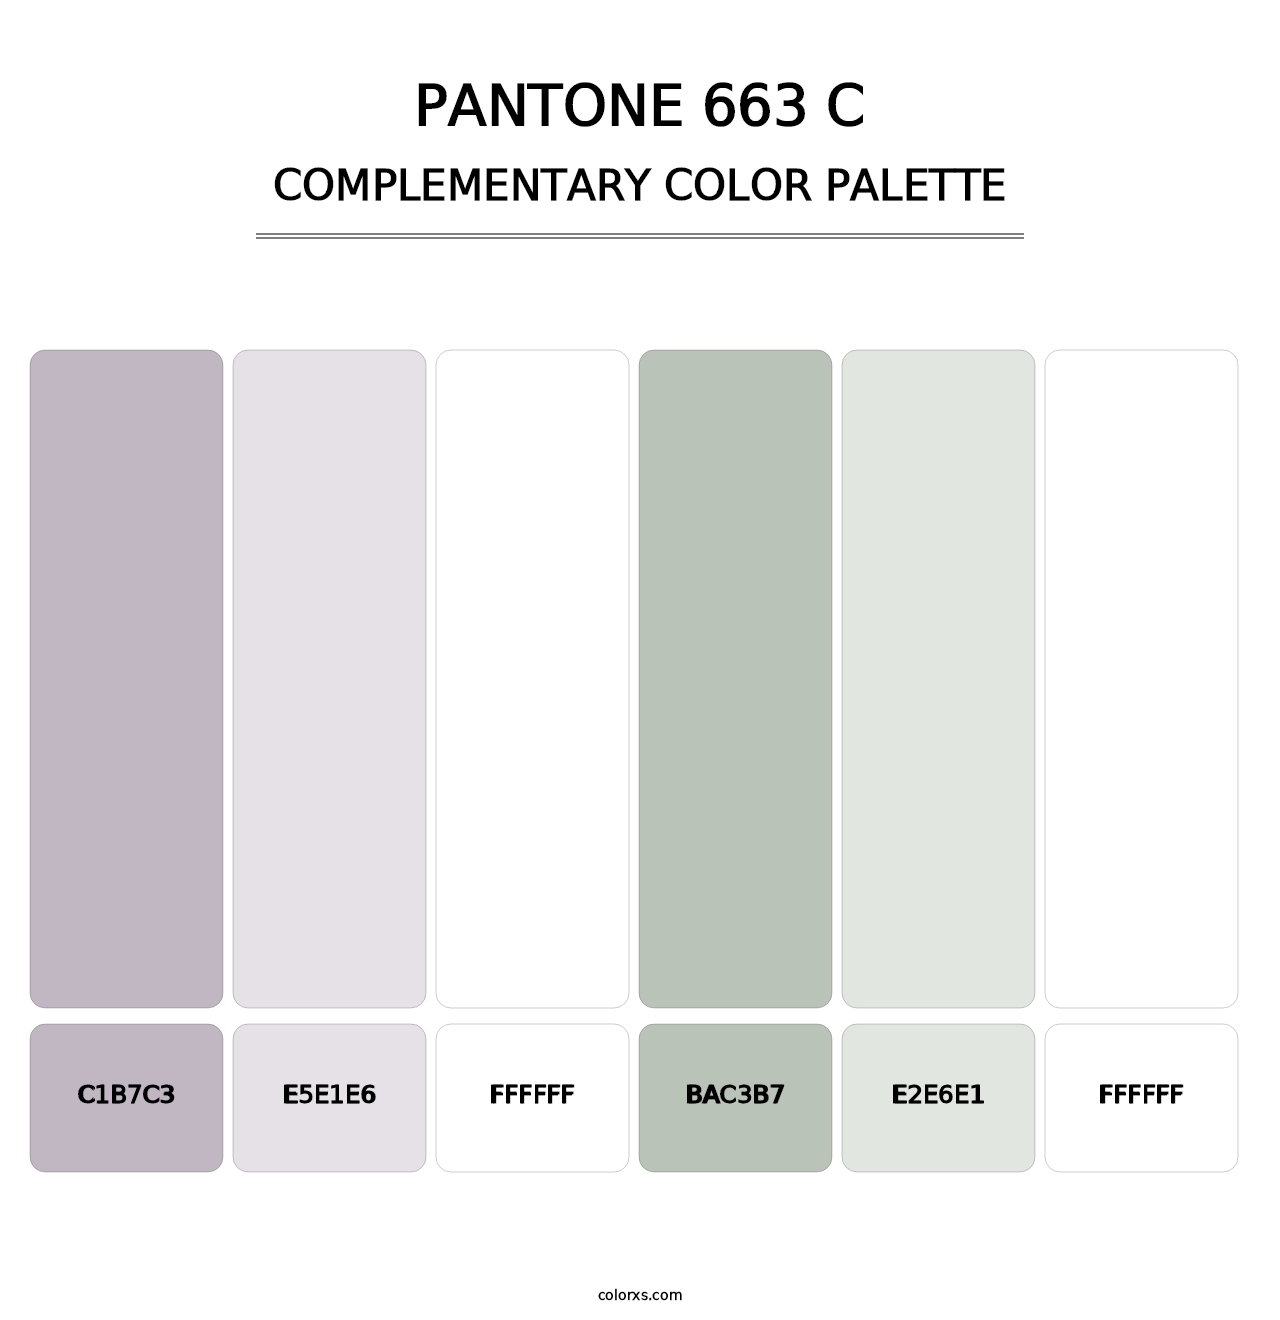 PANTONE 663 C - Complementary Color Palette